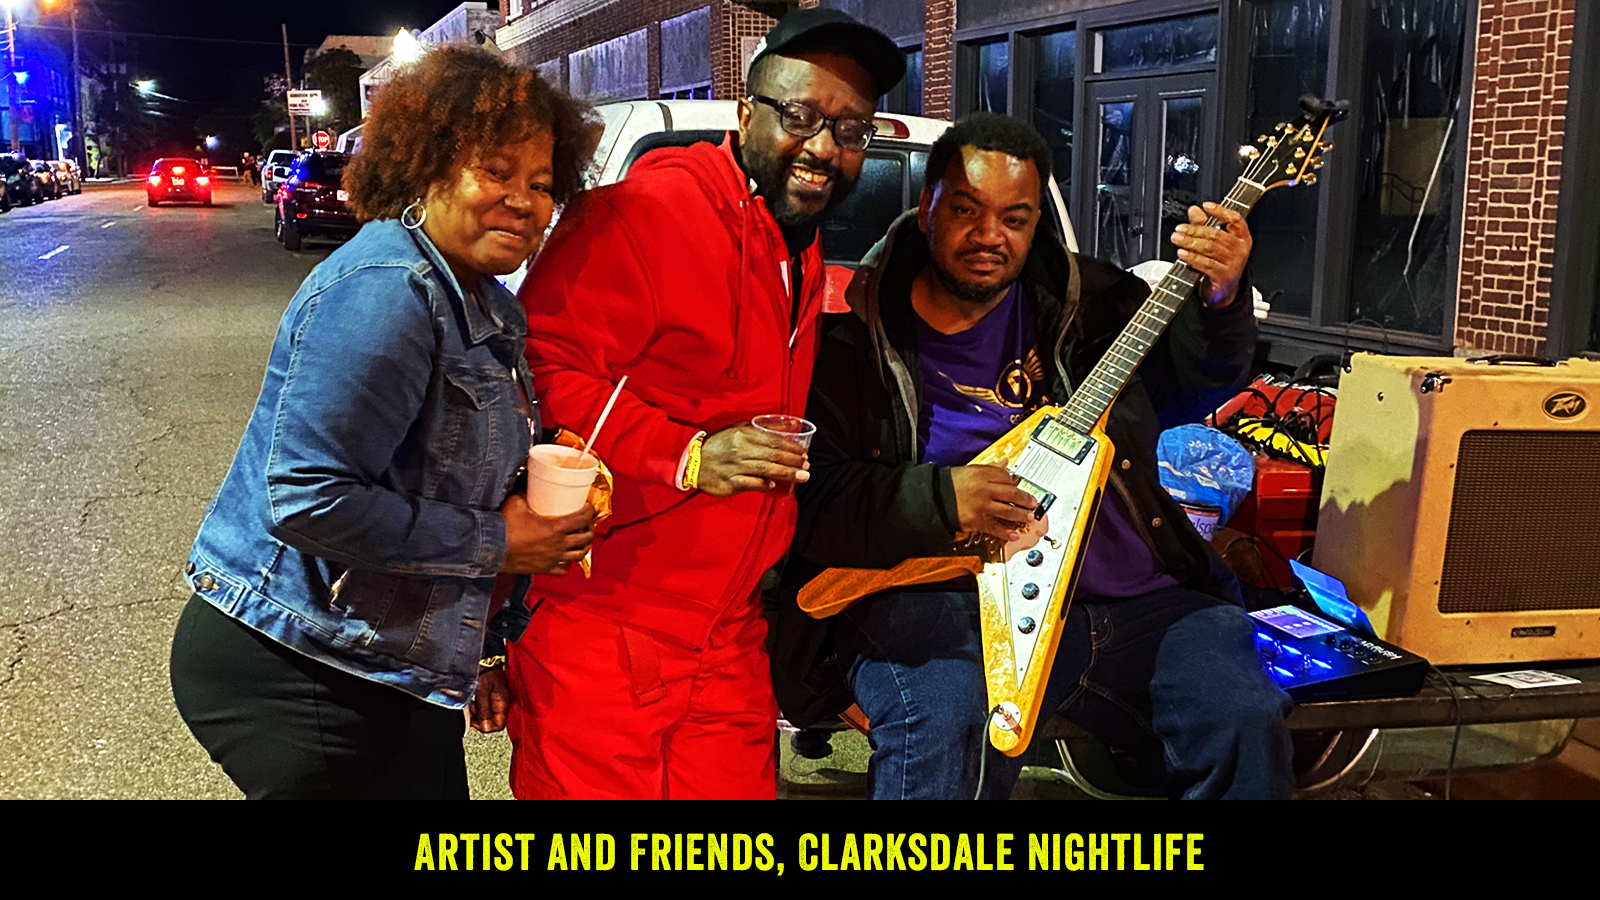 Artist and Friends, Clarksdale nightlife